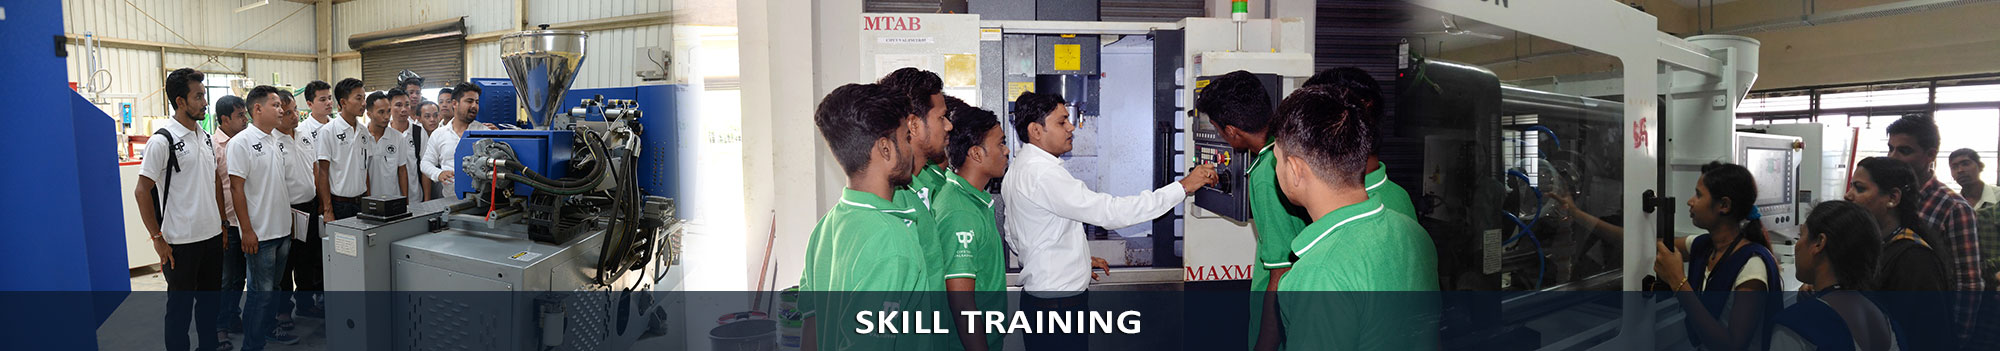 Skill Training